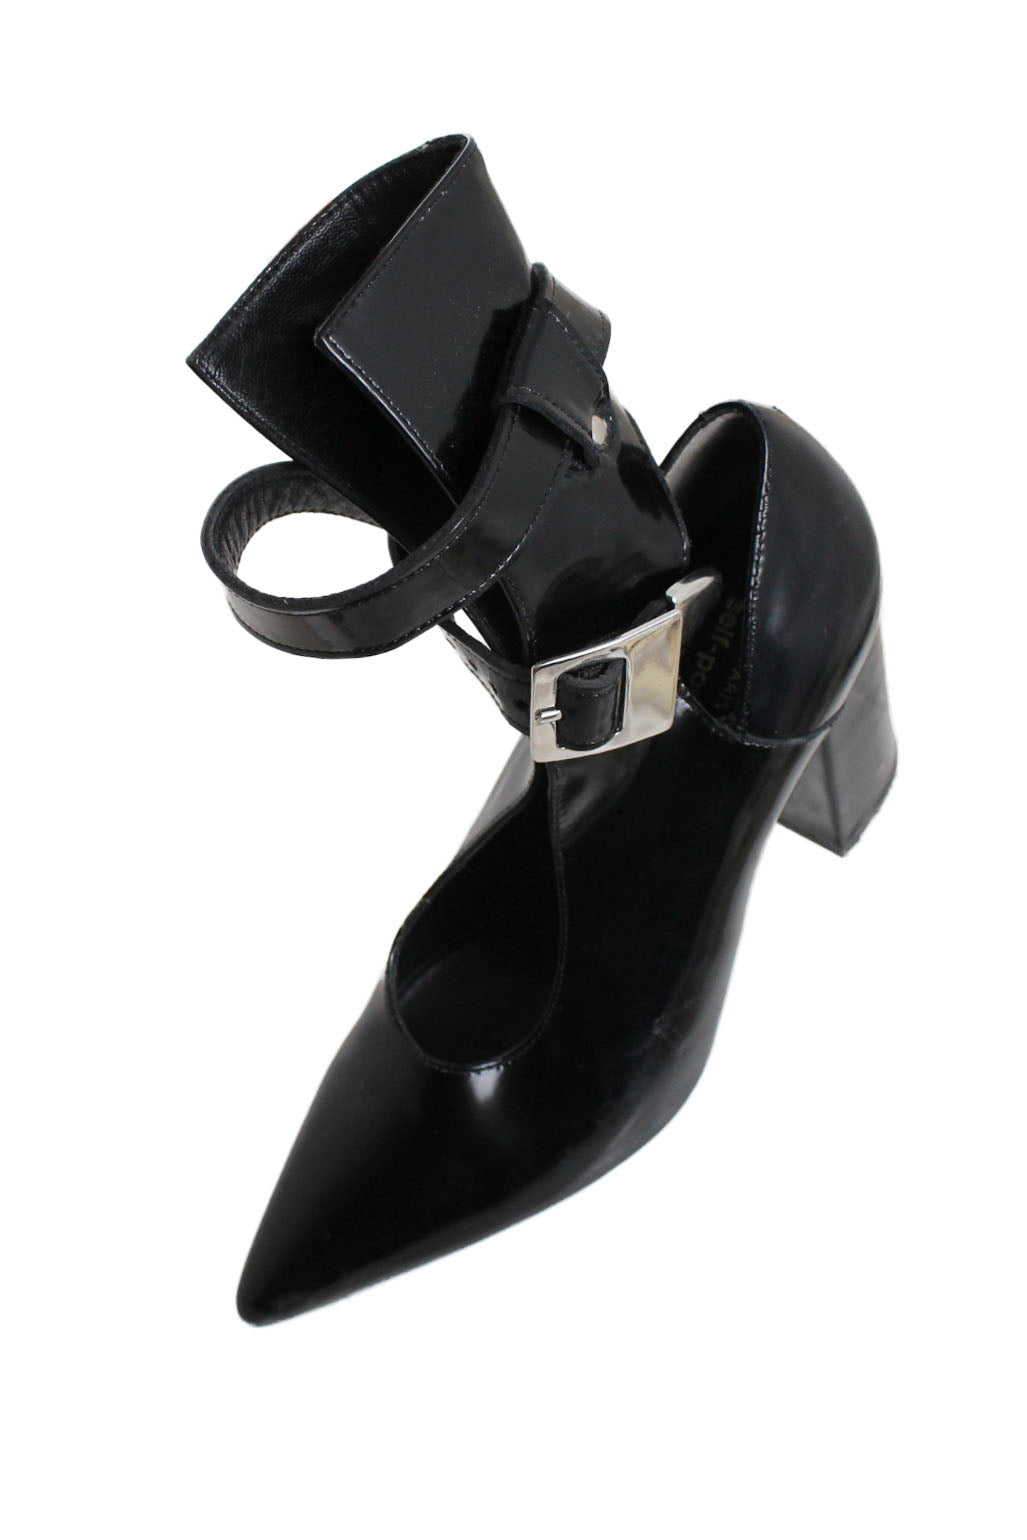 top view of black heels.  